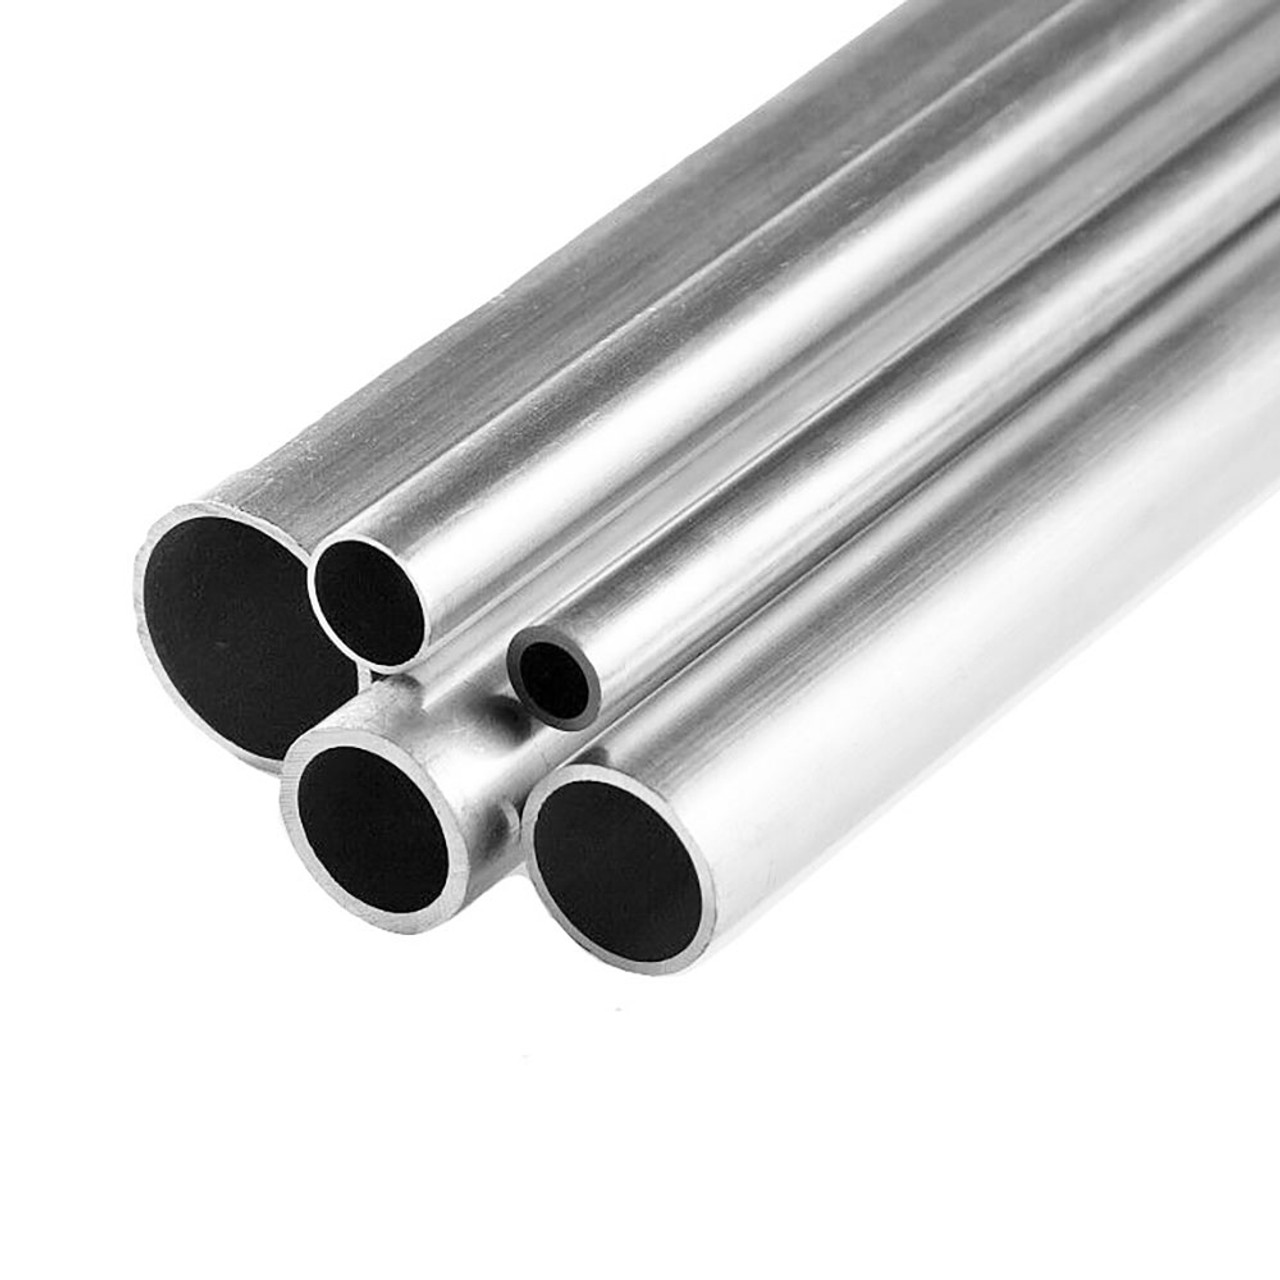 1.625" OD x 0.065" W x 48" (3 Pack), 6061-T6 Aluminum Round Tube